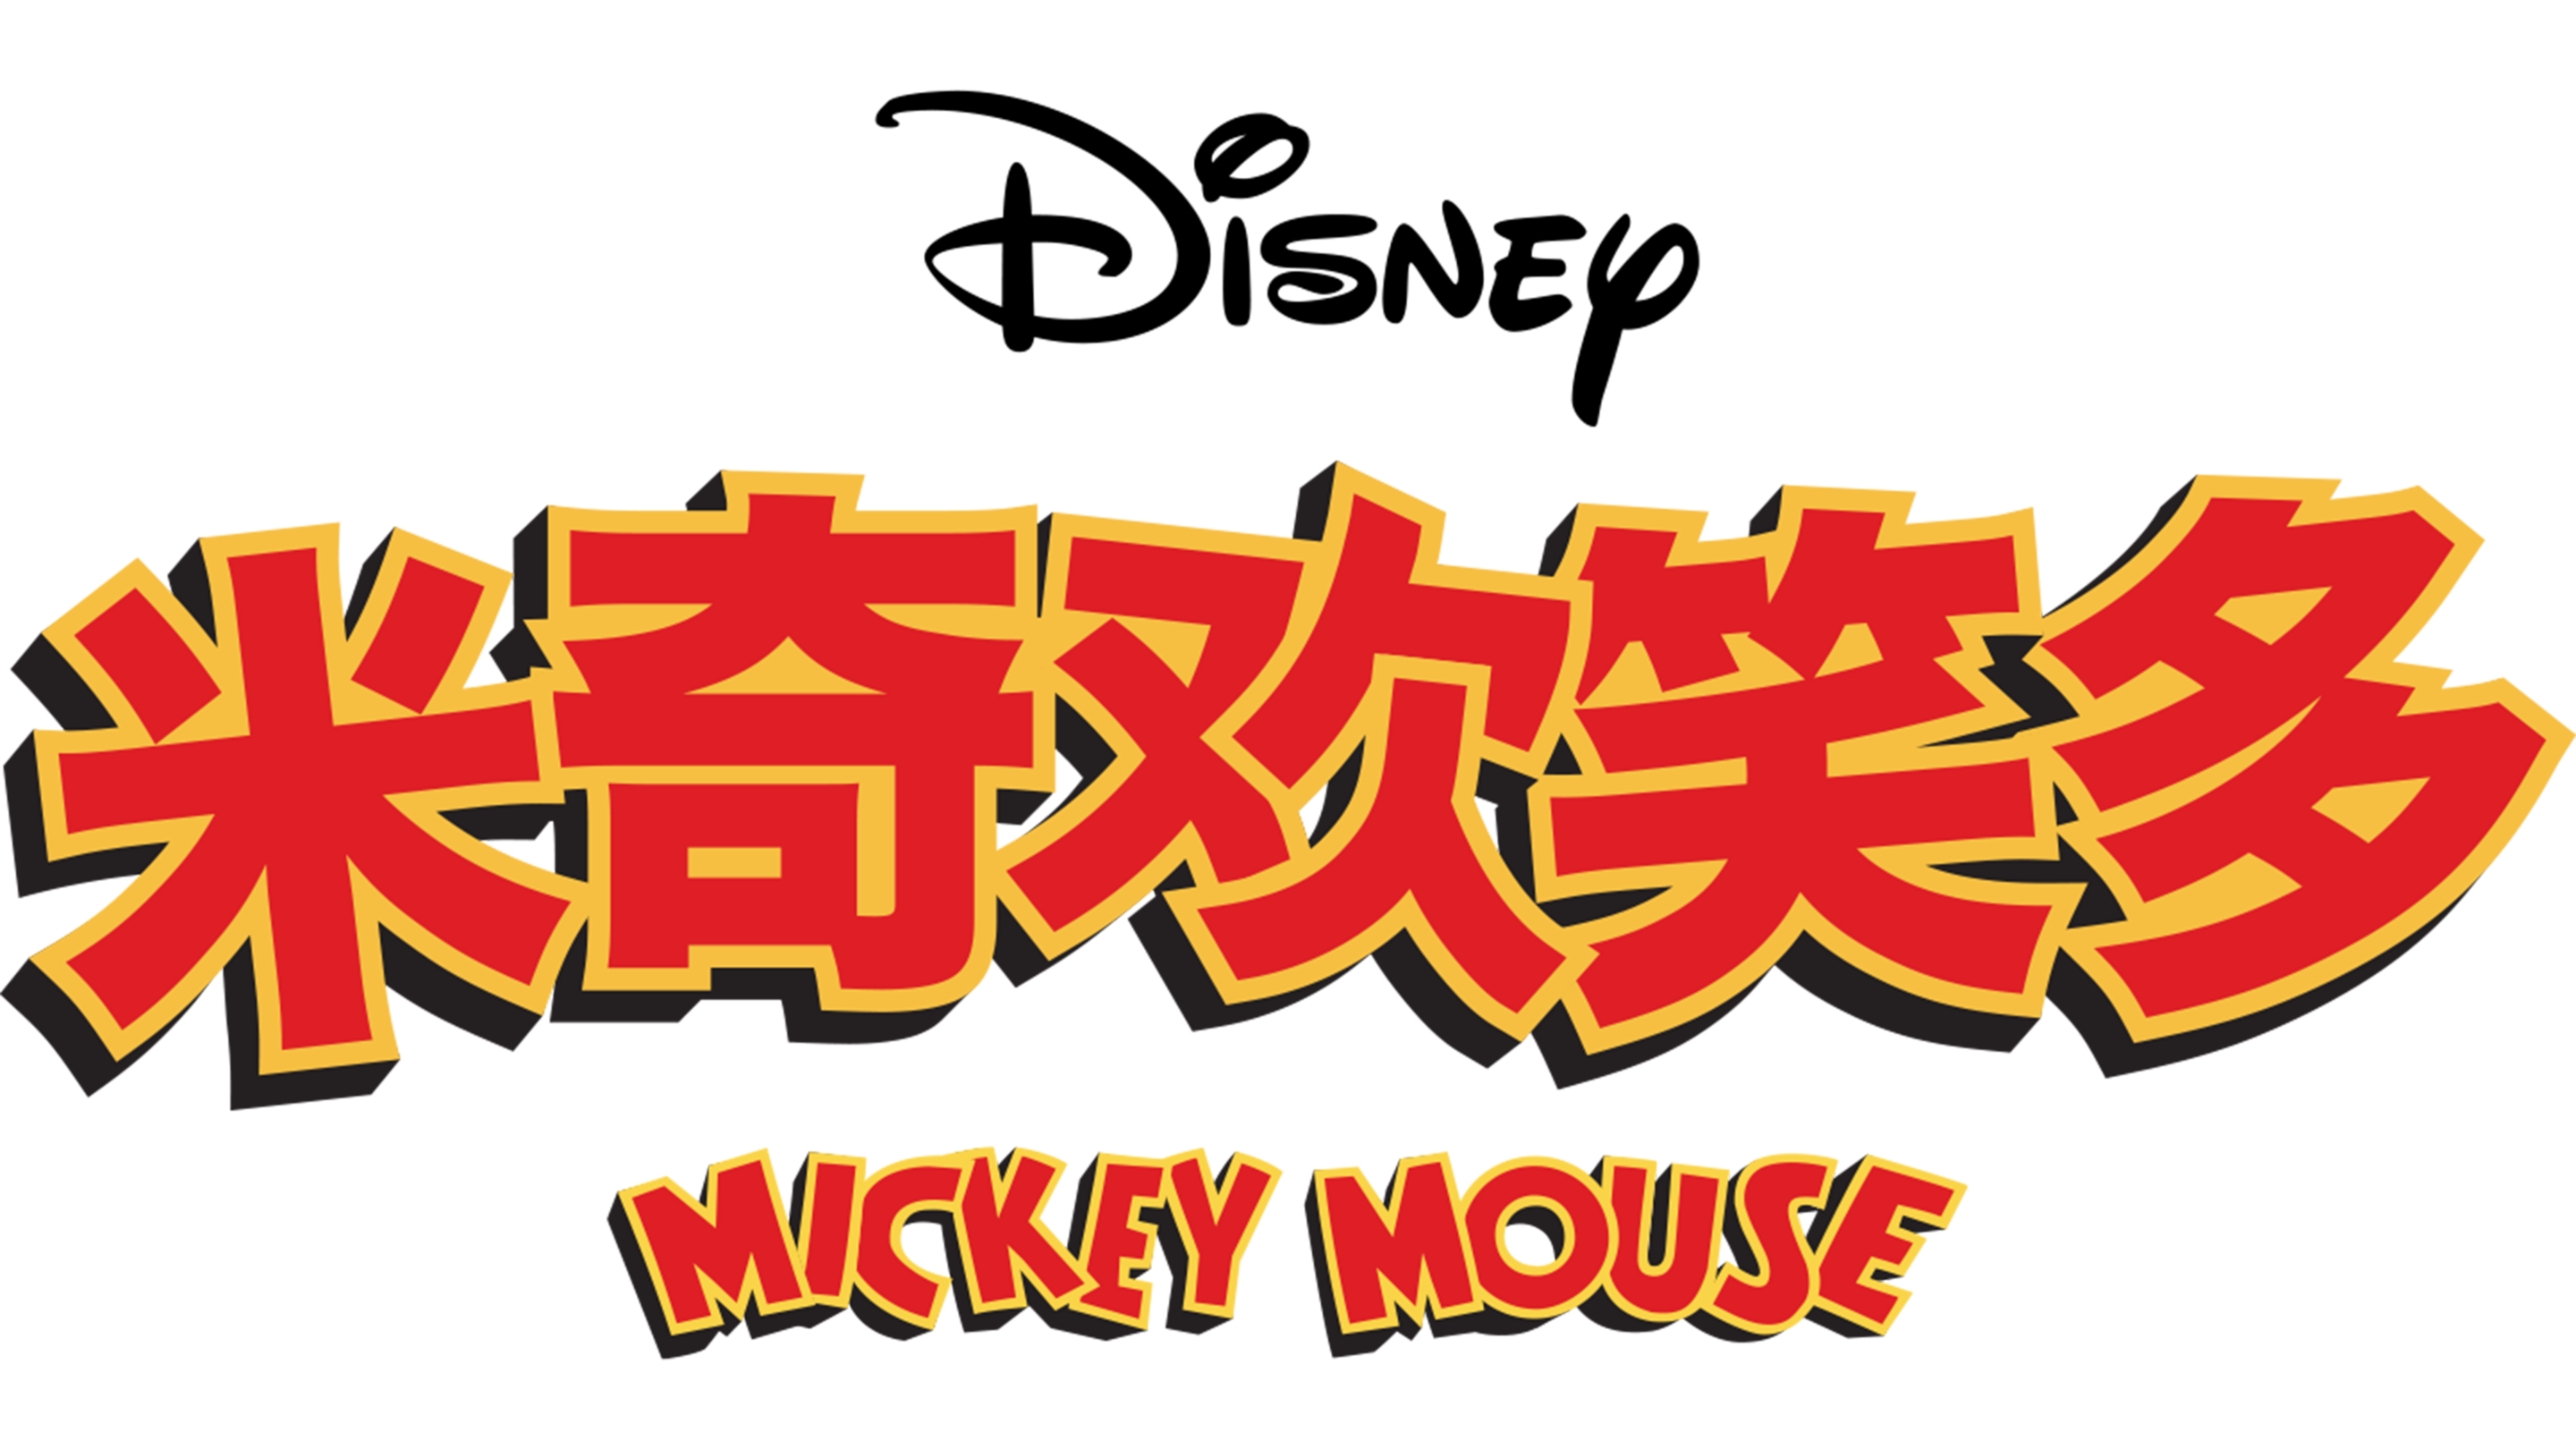 A Casa do Mickey Mouse, The Dubbing Database